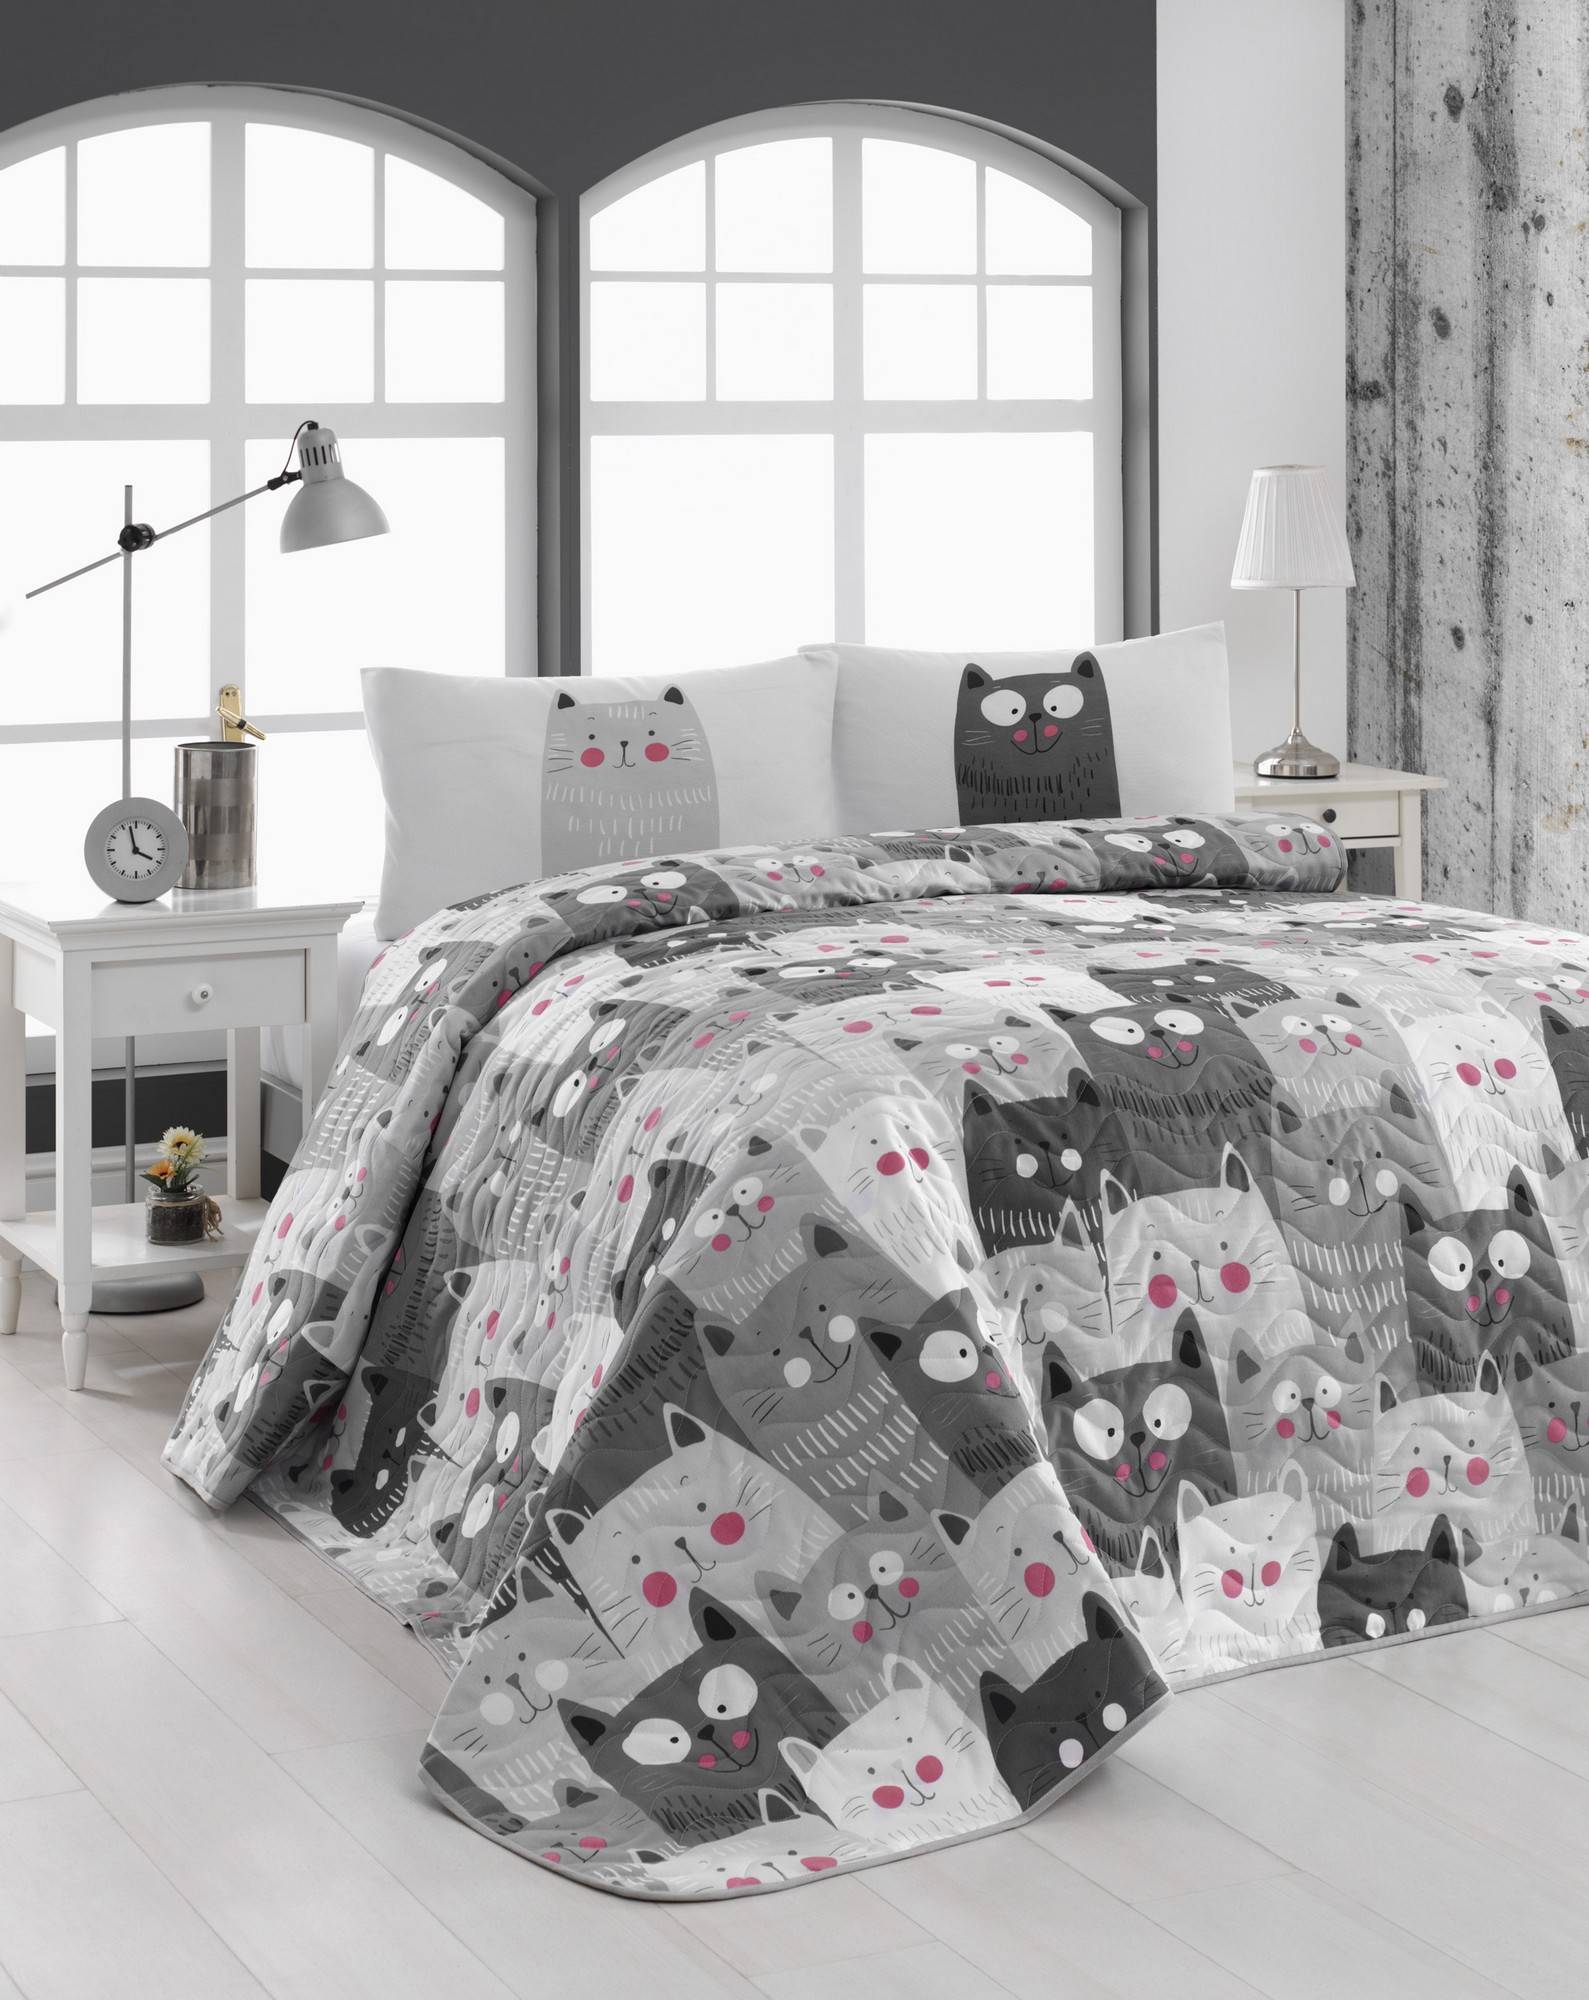 Set van sprei 220x240cm en 2 kussenslopen 60x60cm Nakoma Fabric Cats Pattern Grey, white and black